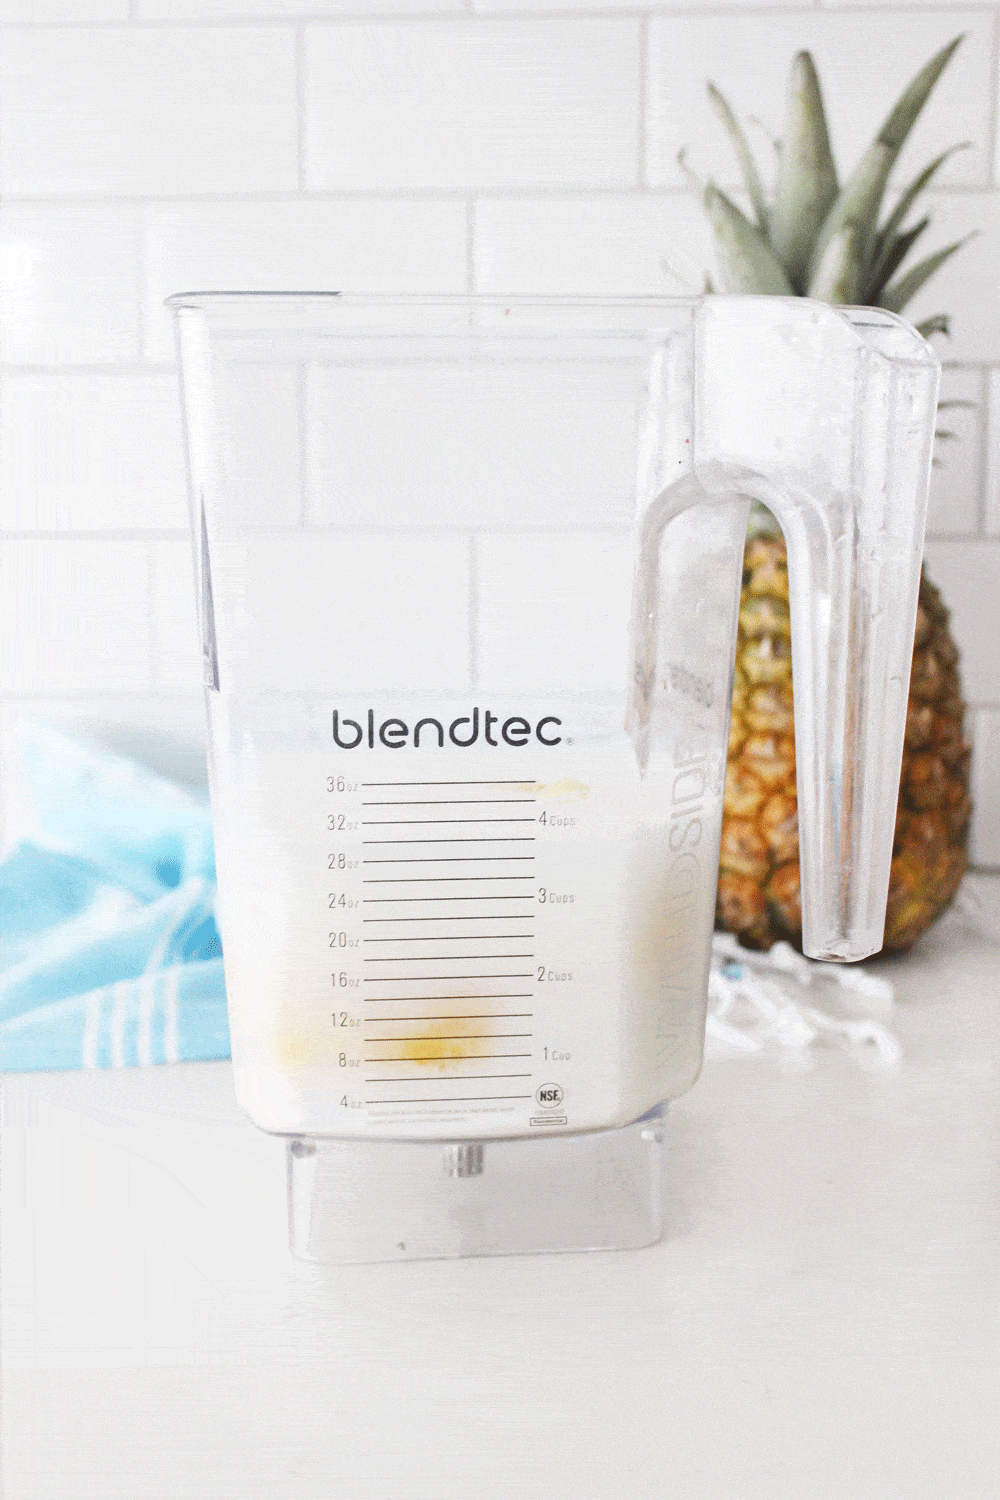 blendtec blender with coconut pineapple whip ingredients inside